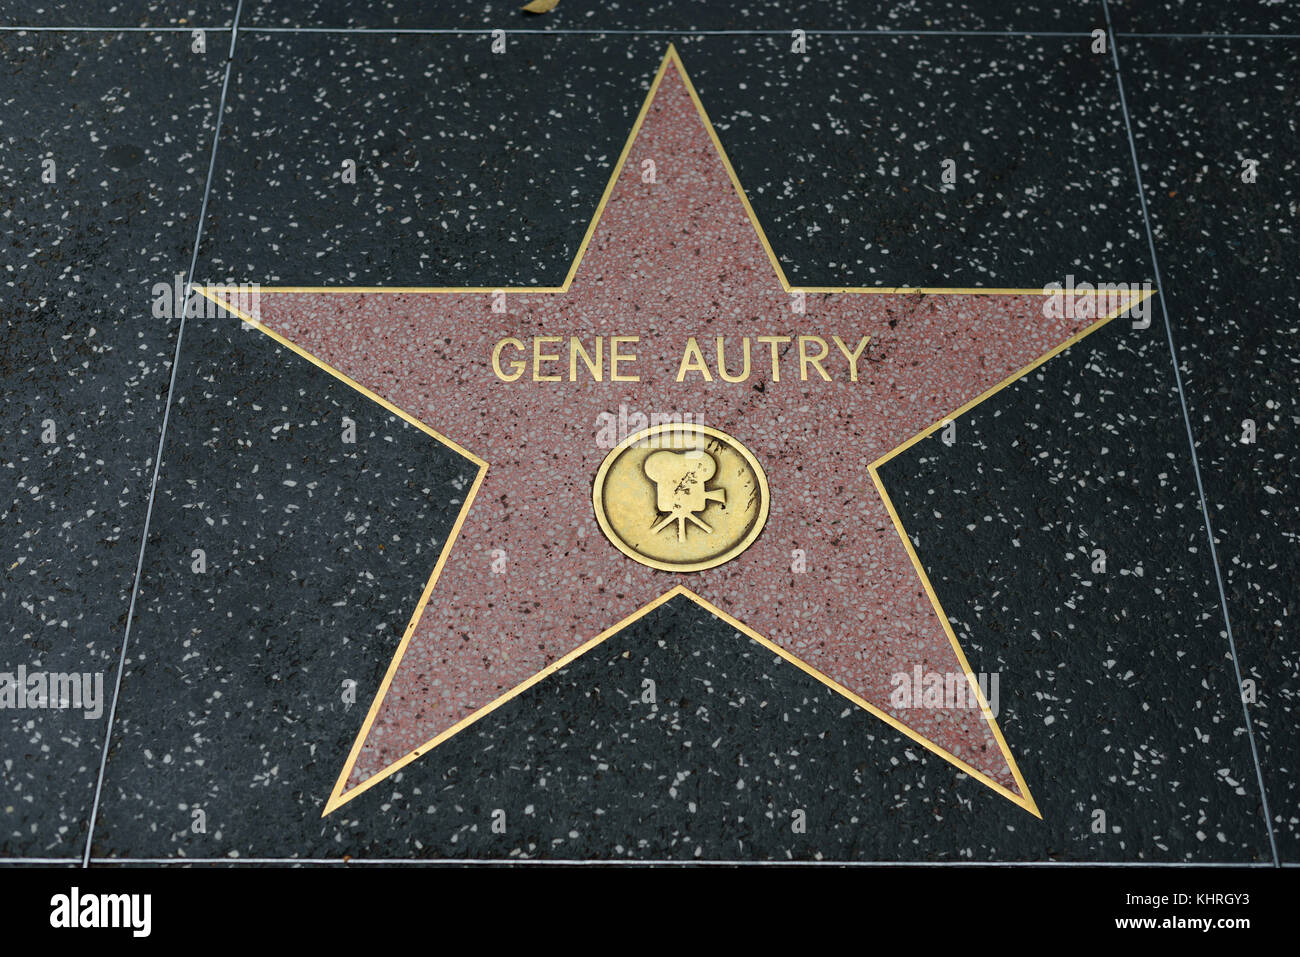 HOLLYWOOD, CA - DEZEMBER 06: Gene Autry Star auf dem Hollywood Walk of Fame in Hollywood, Kalifornien am 6. Dezember 2016. Stockfoto